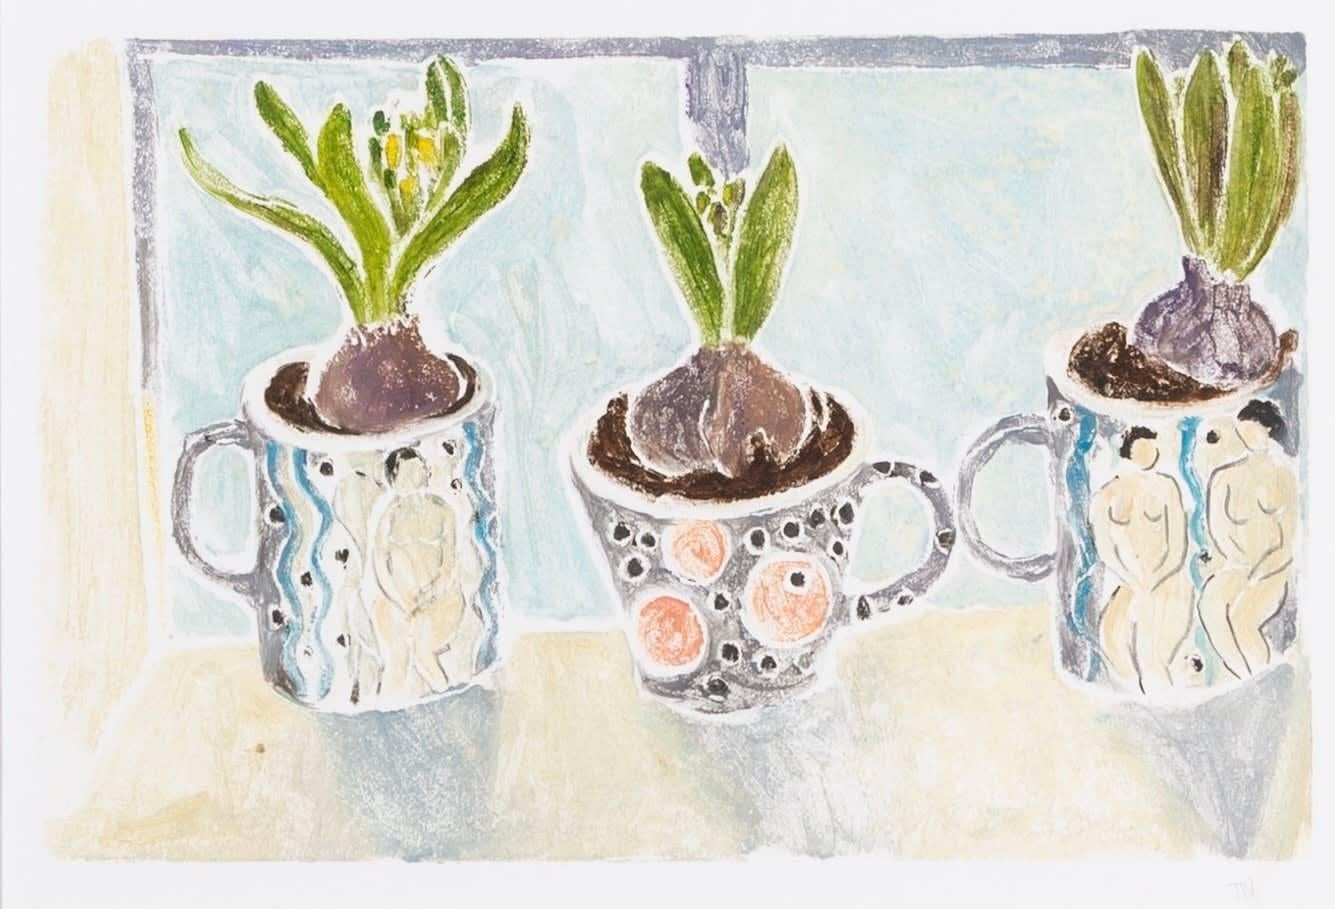 Untitled (Hyacinth Bulbs in Mugs), Styrofoam Print by Tessa Newcomb B. 1955

Informations complémentaires :
Support : Impression en polystyrène avec peinture sur carte
Dimensions : 28,1 x 43,7 cm : 28,1 x 43,7 cm
11 x 17 1/4 in
Signé avec des